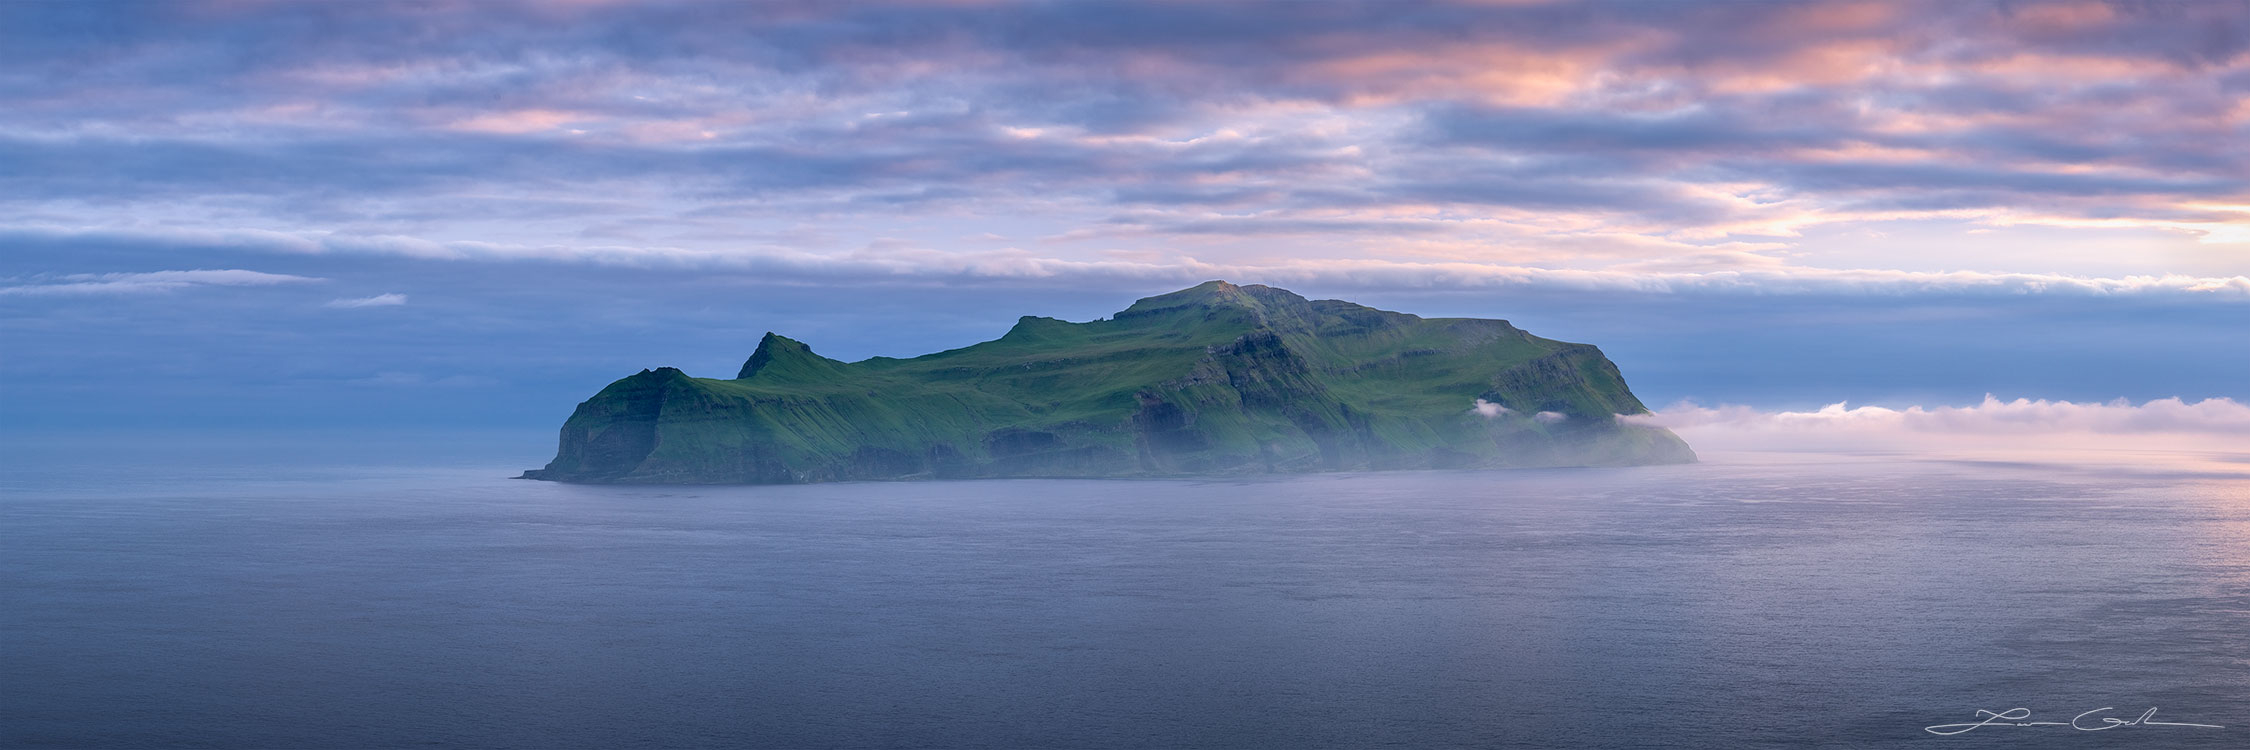 Faroe Islands Nature and Landscape Photography